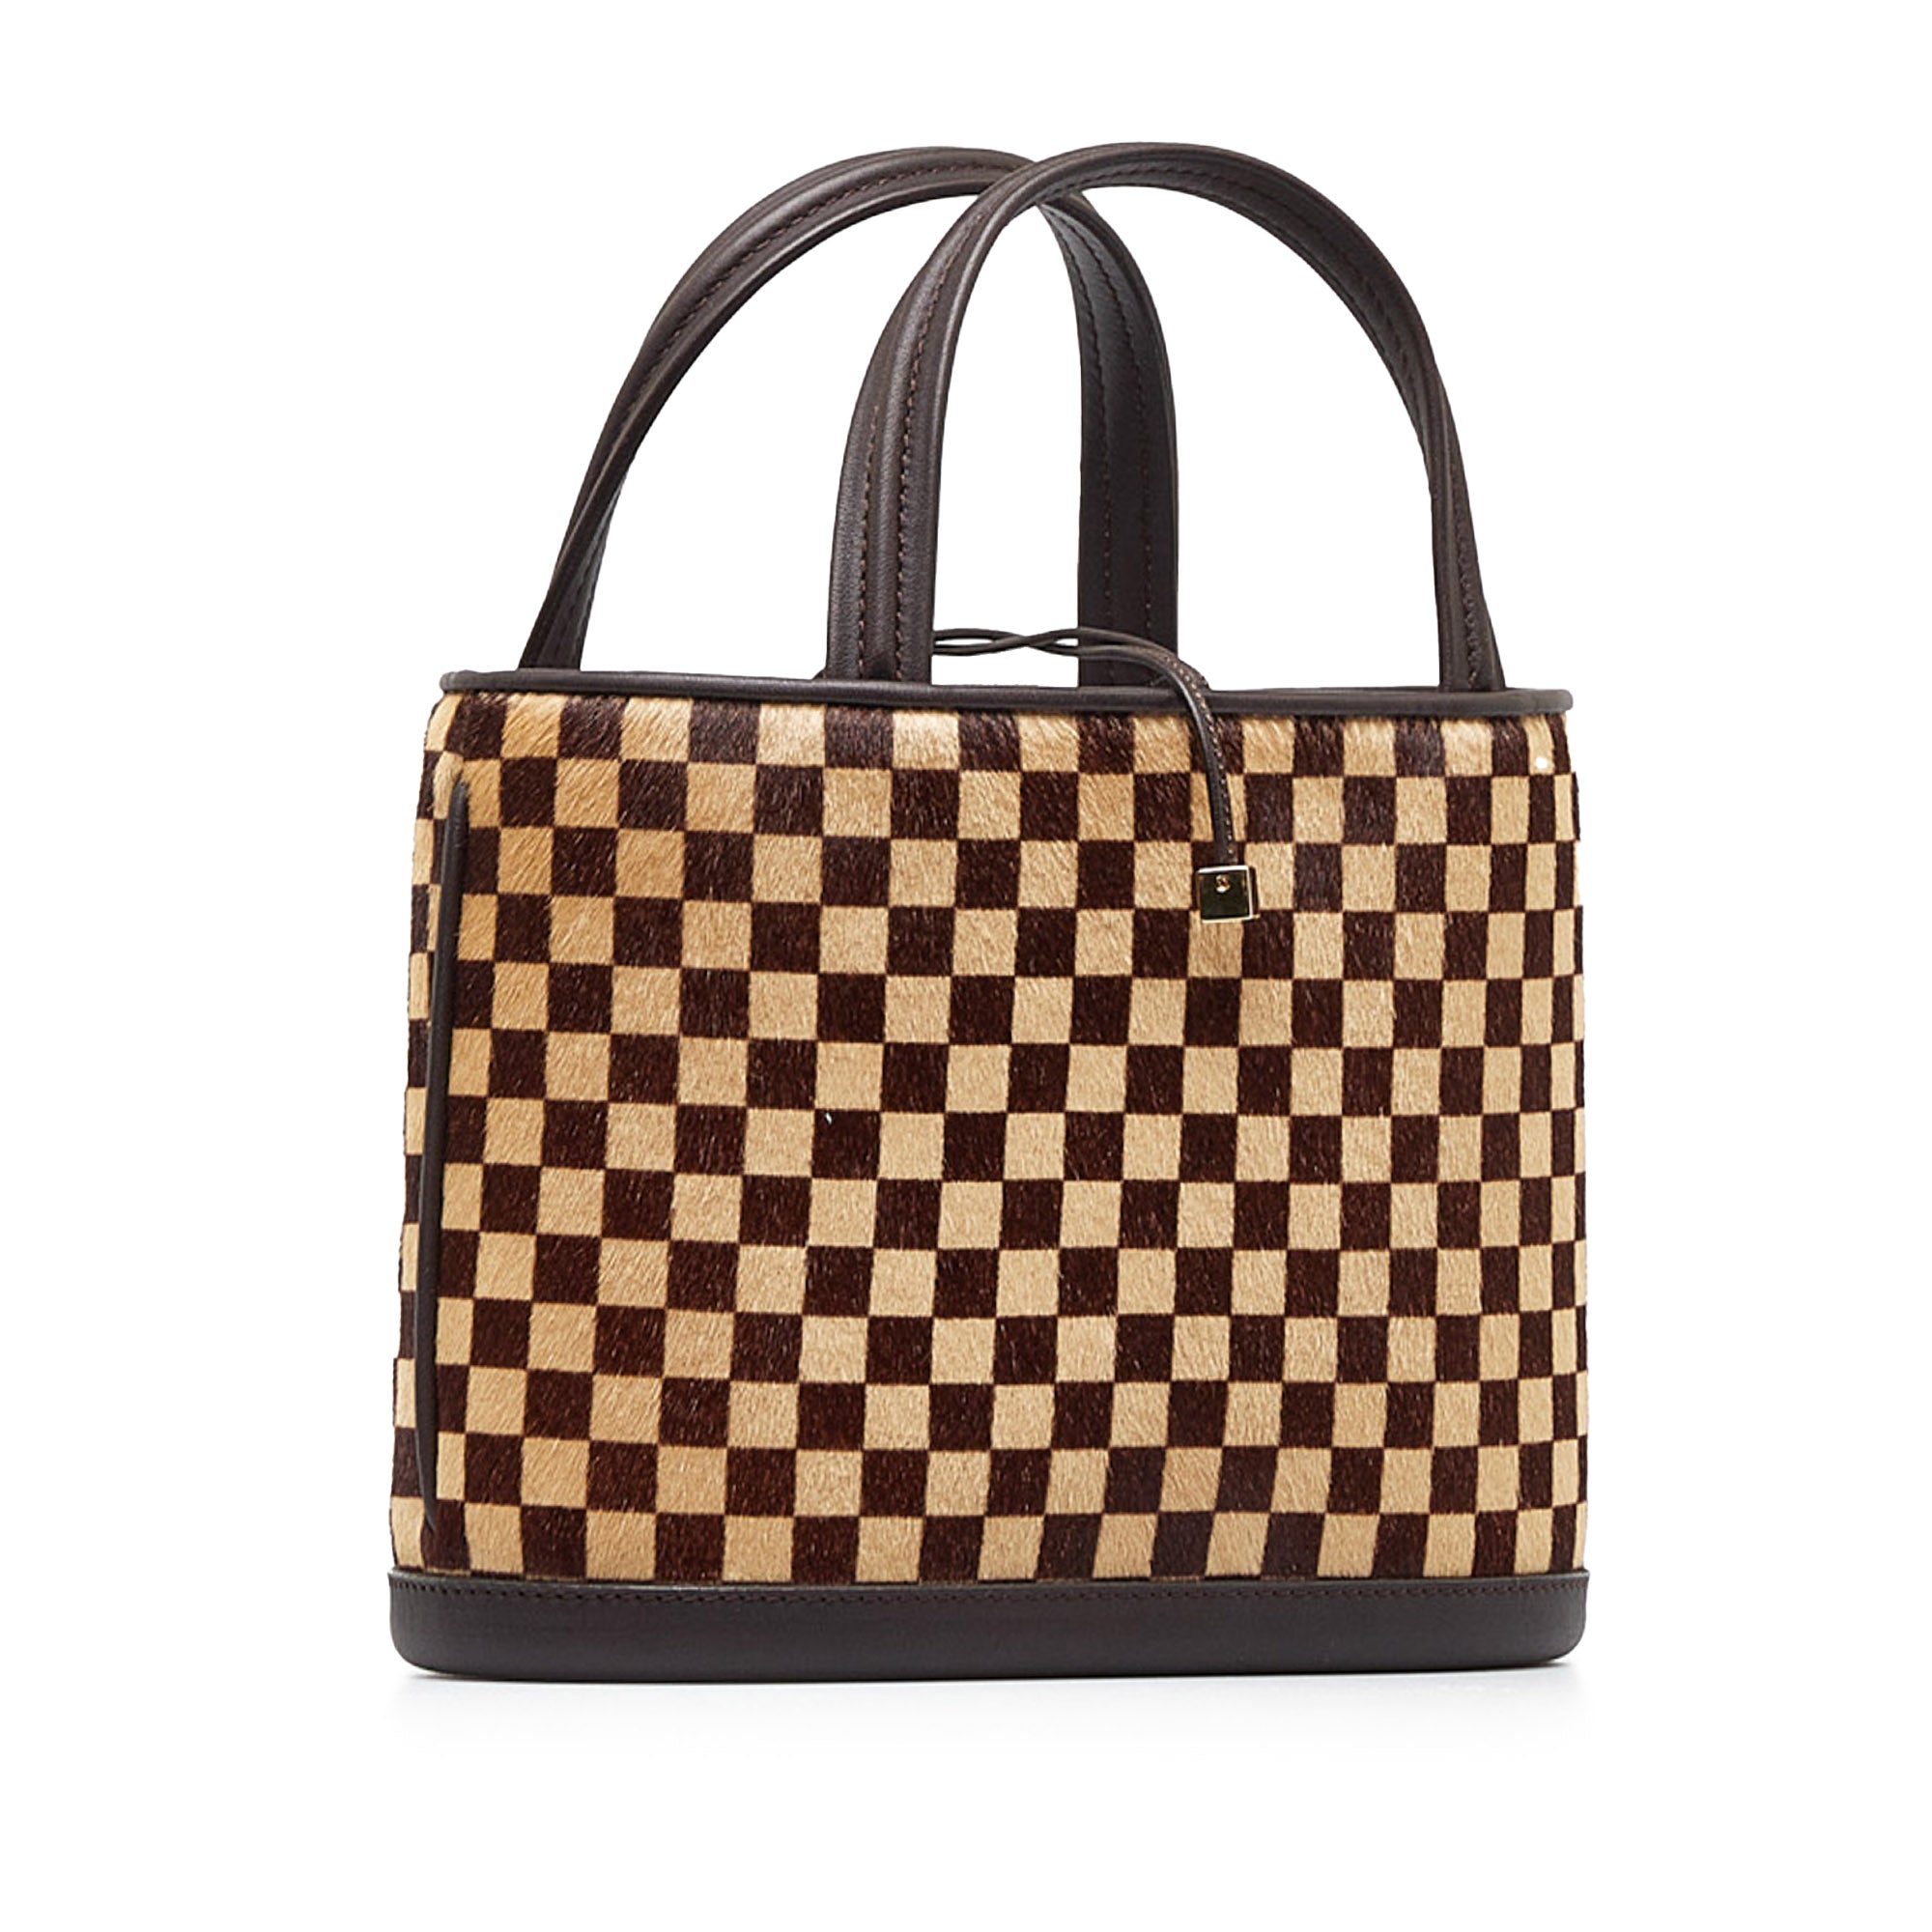 Brown Louis Vuitton Damier Sauvage Impala Handbag